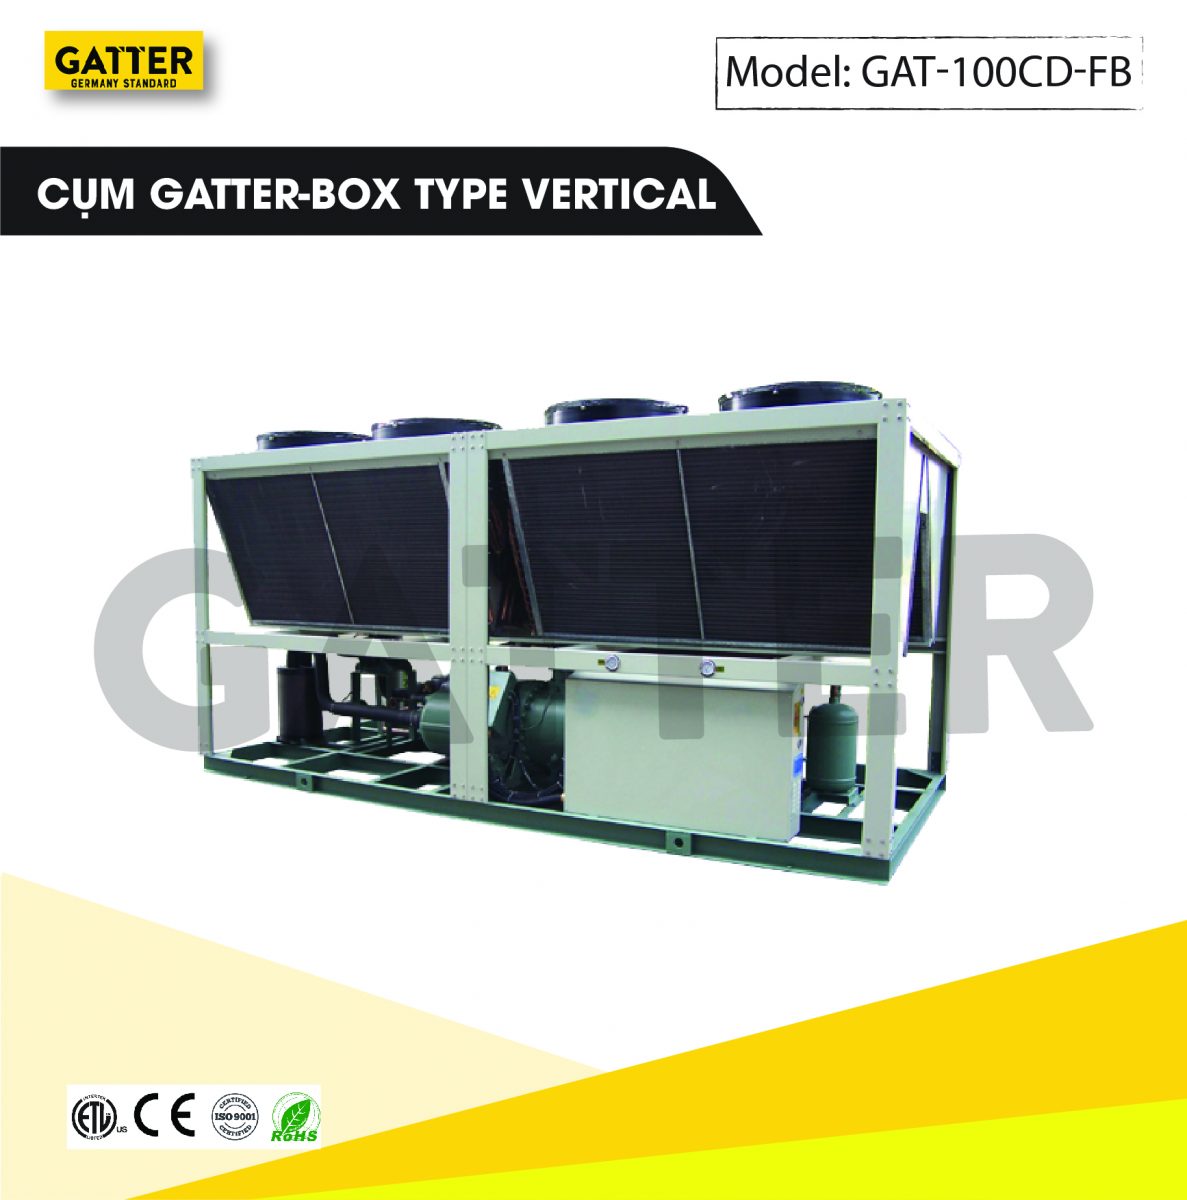 Cụm Gatter-box GAT-100CD-FB